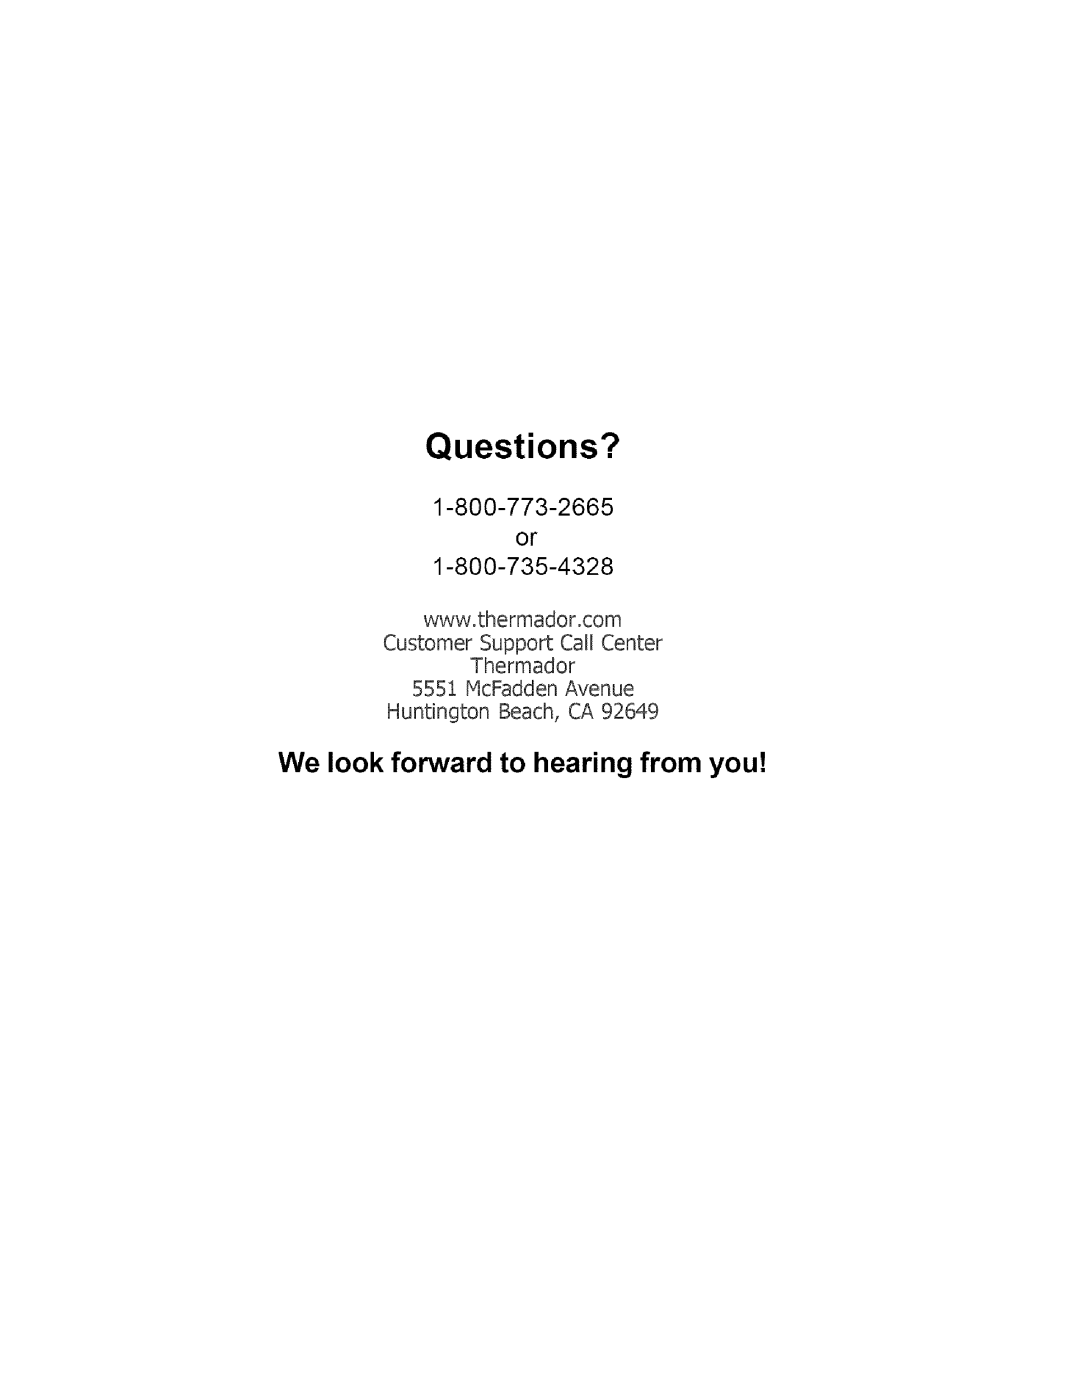 Thermador DM302 1-800-773-2665, Customer Support Ca Center Thermador, HcFadden Avenue Huntington Beach, CA, Questions? 